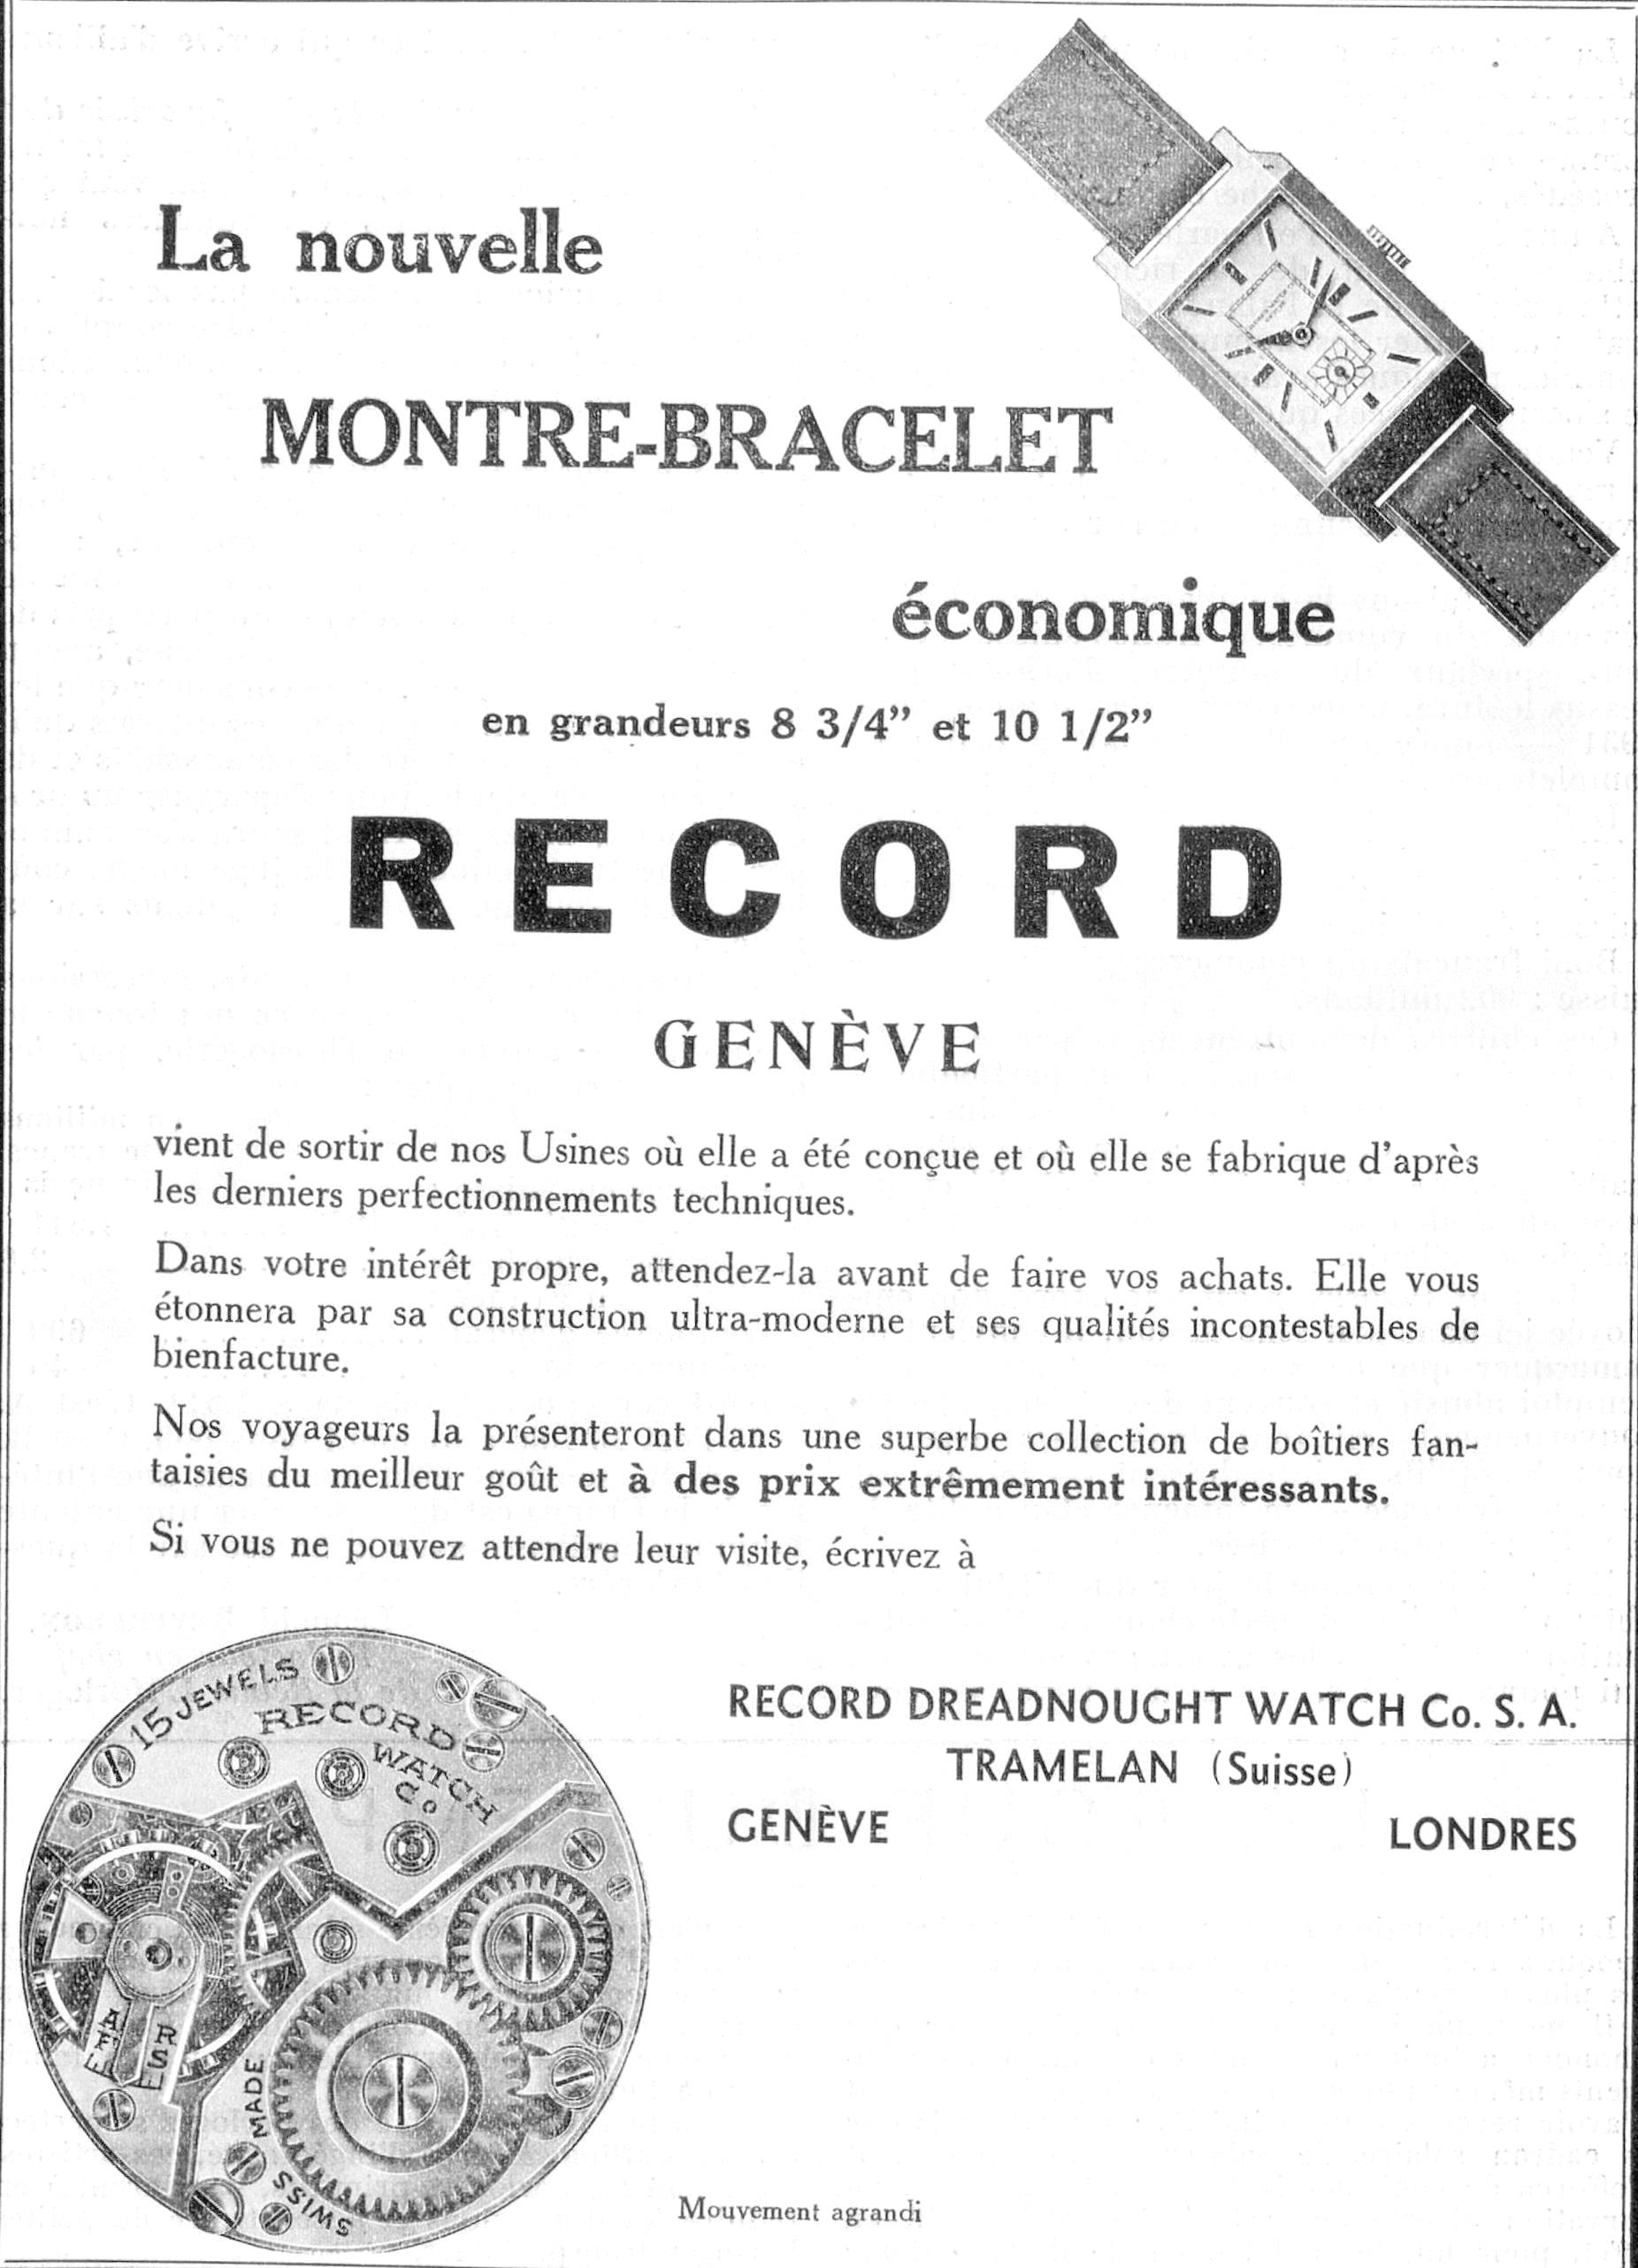 Record 1933 0.jpg